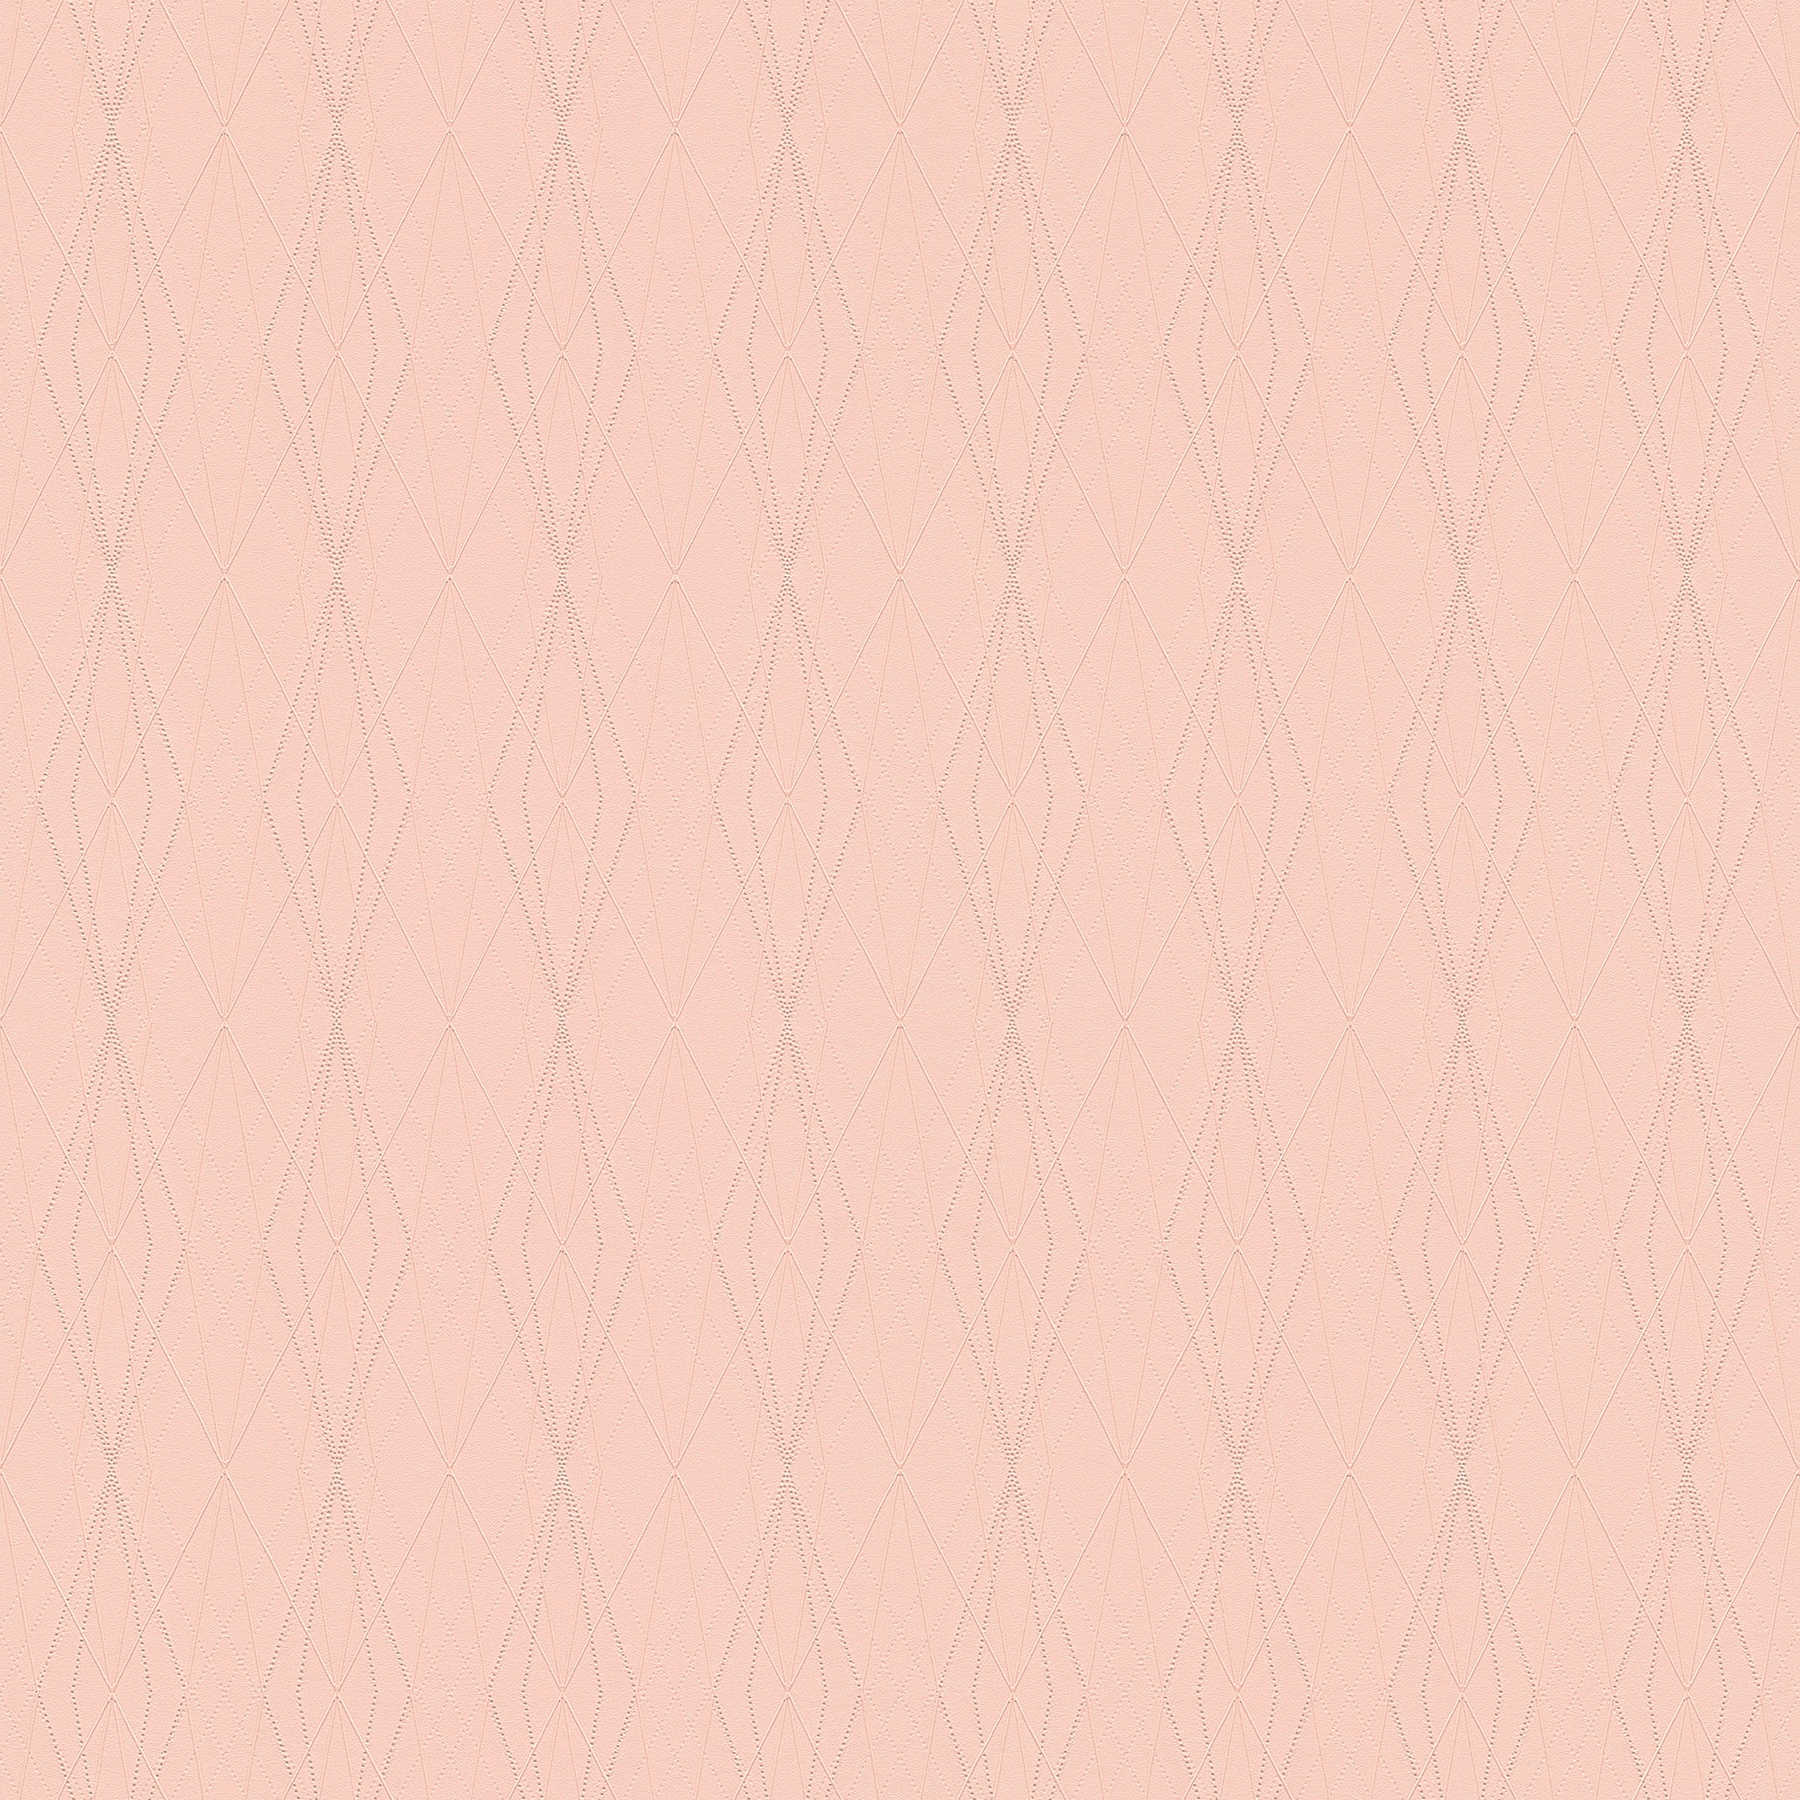 Pink plain wallpaper with diamond pattern - pink
